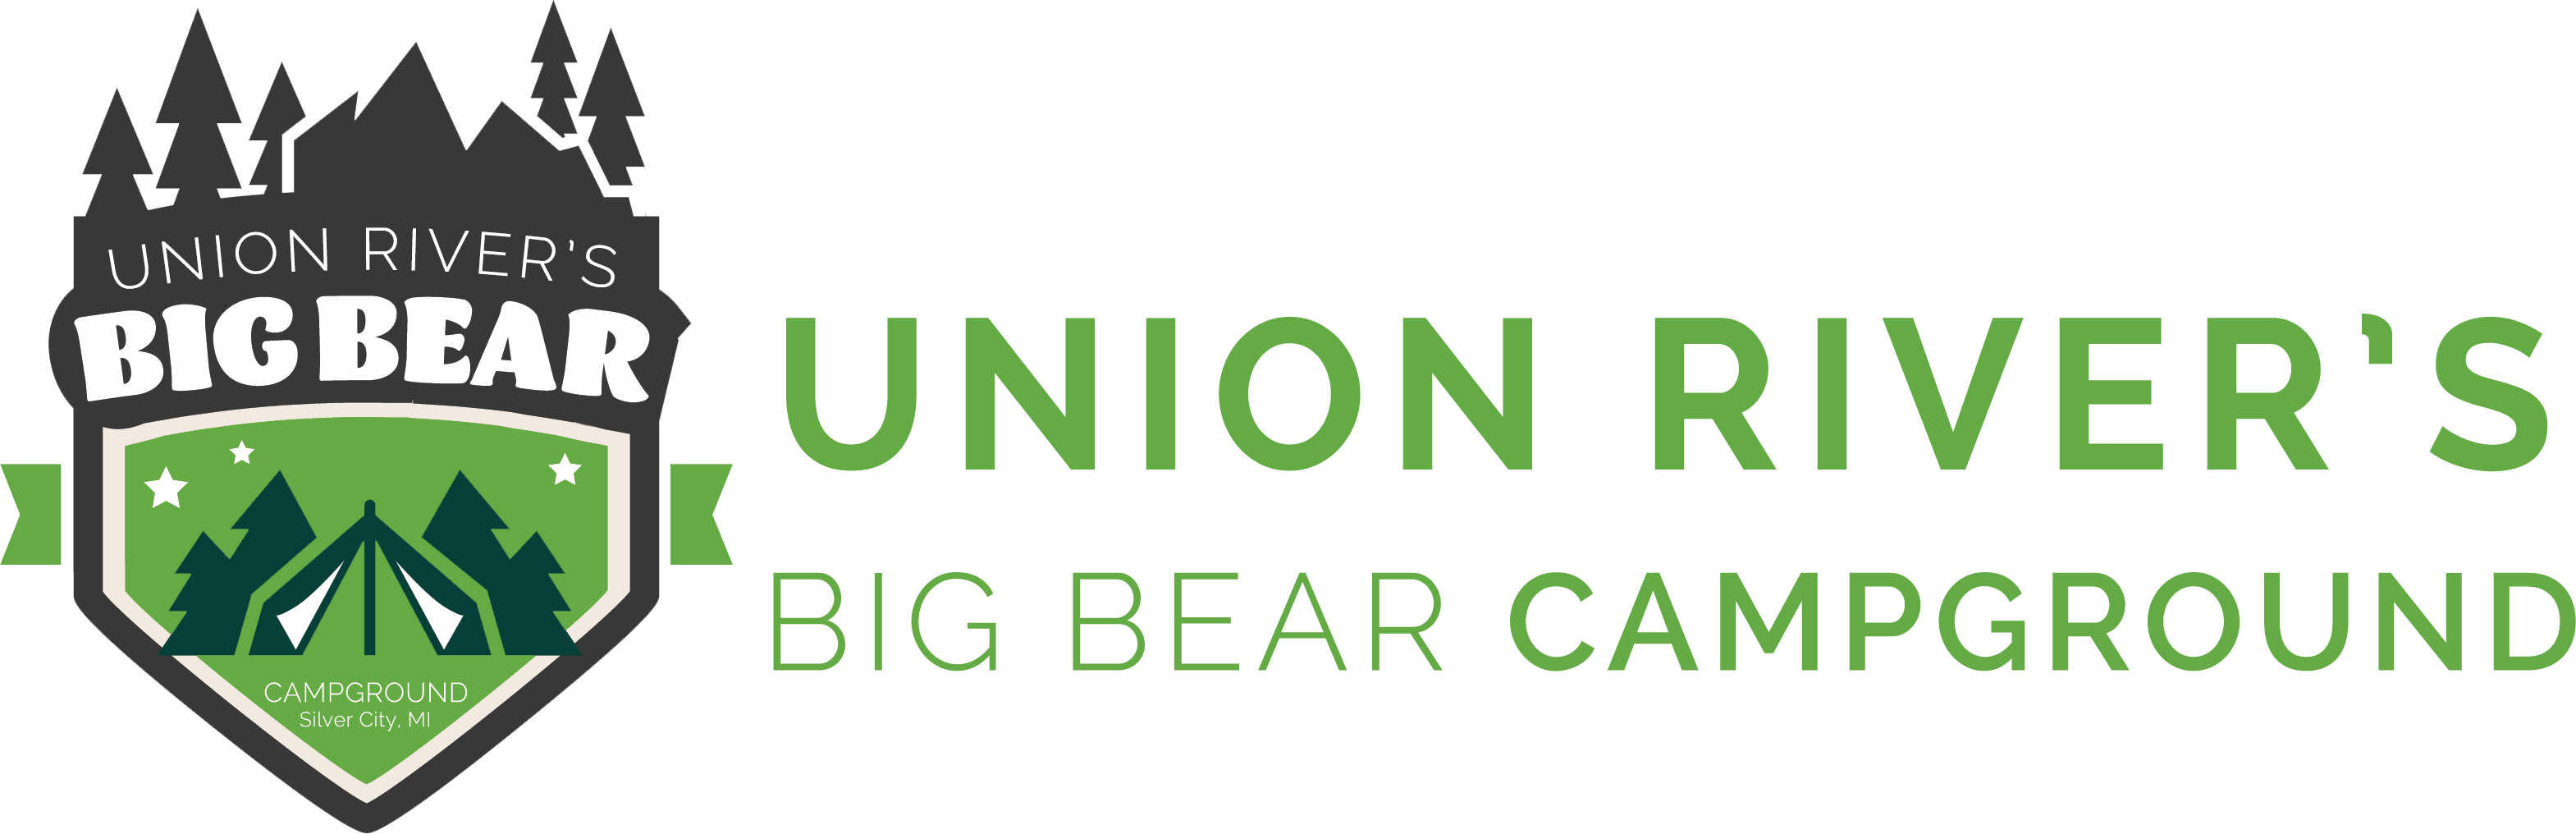 Union River Big Bear Campground